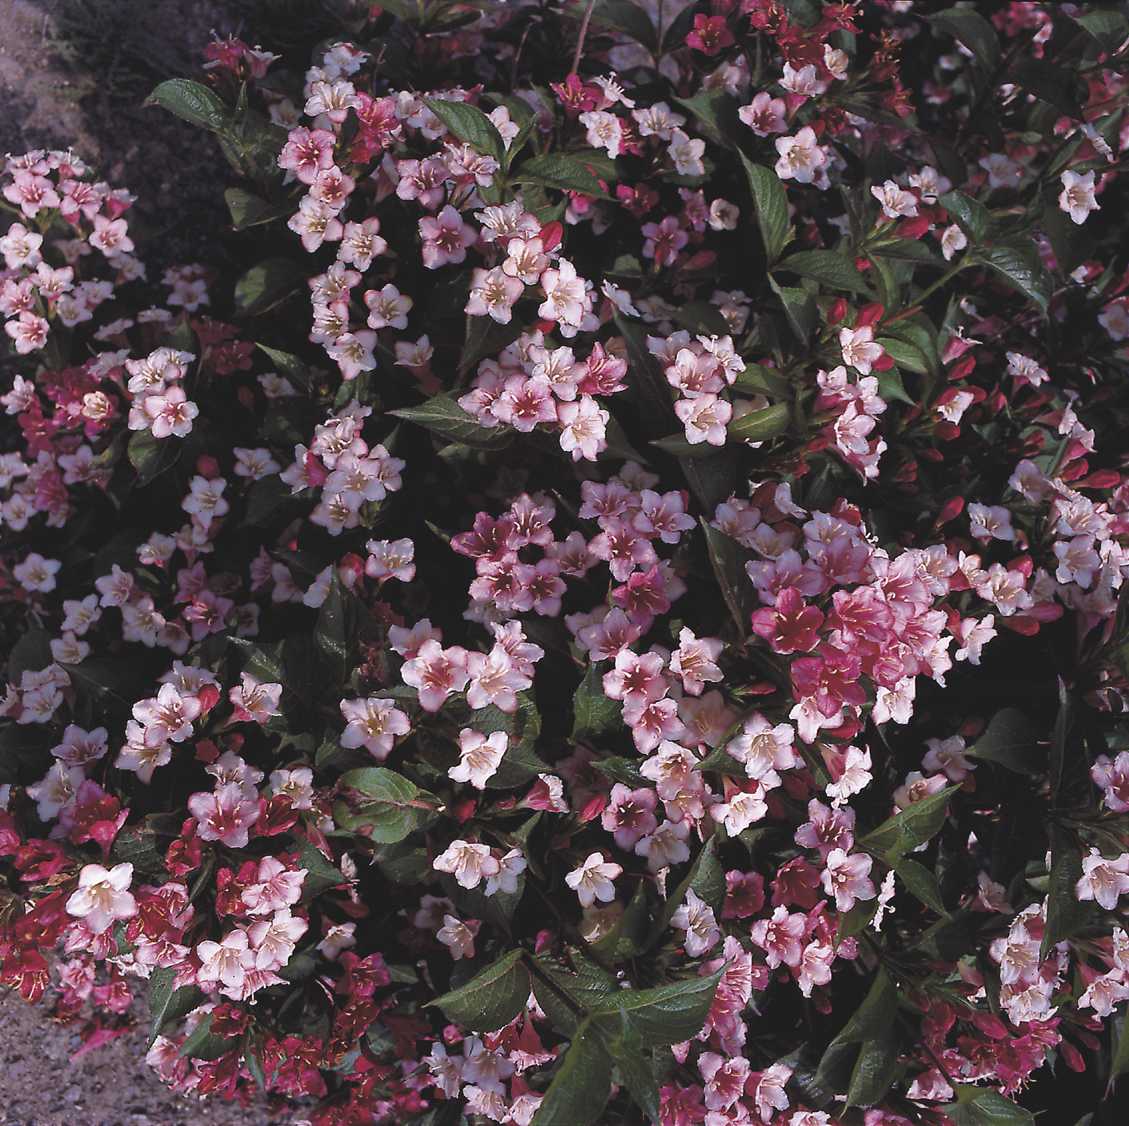 ABELIA grandiflora Kaleidoscope ® at plandorex.com